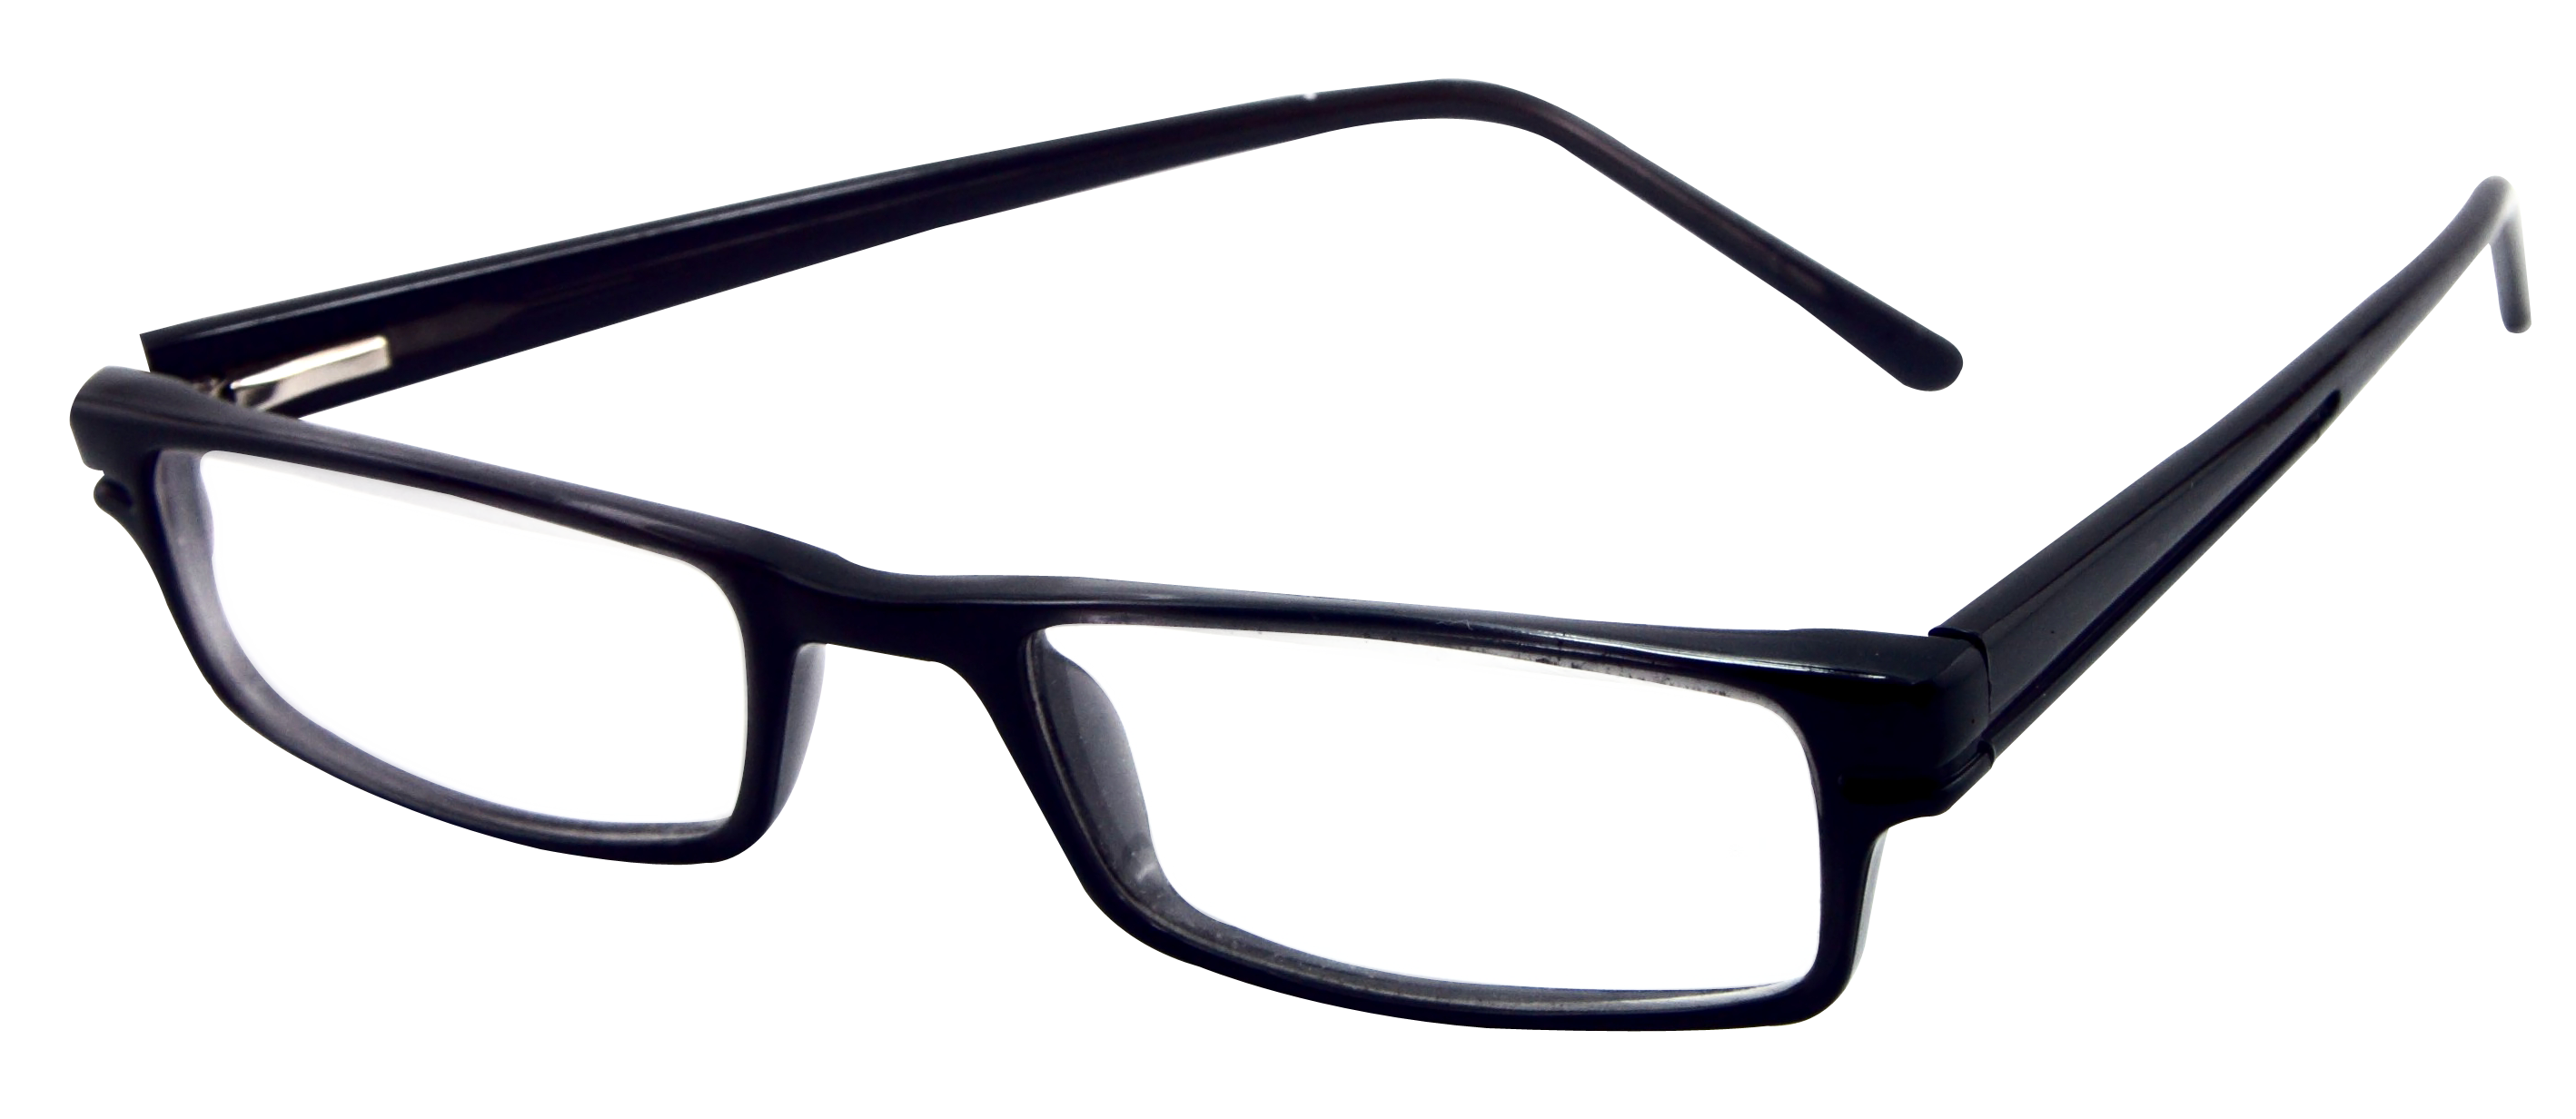 Eye Ray-Ban Glass Amazon.Com Sunglasses Aviator Clipart